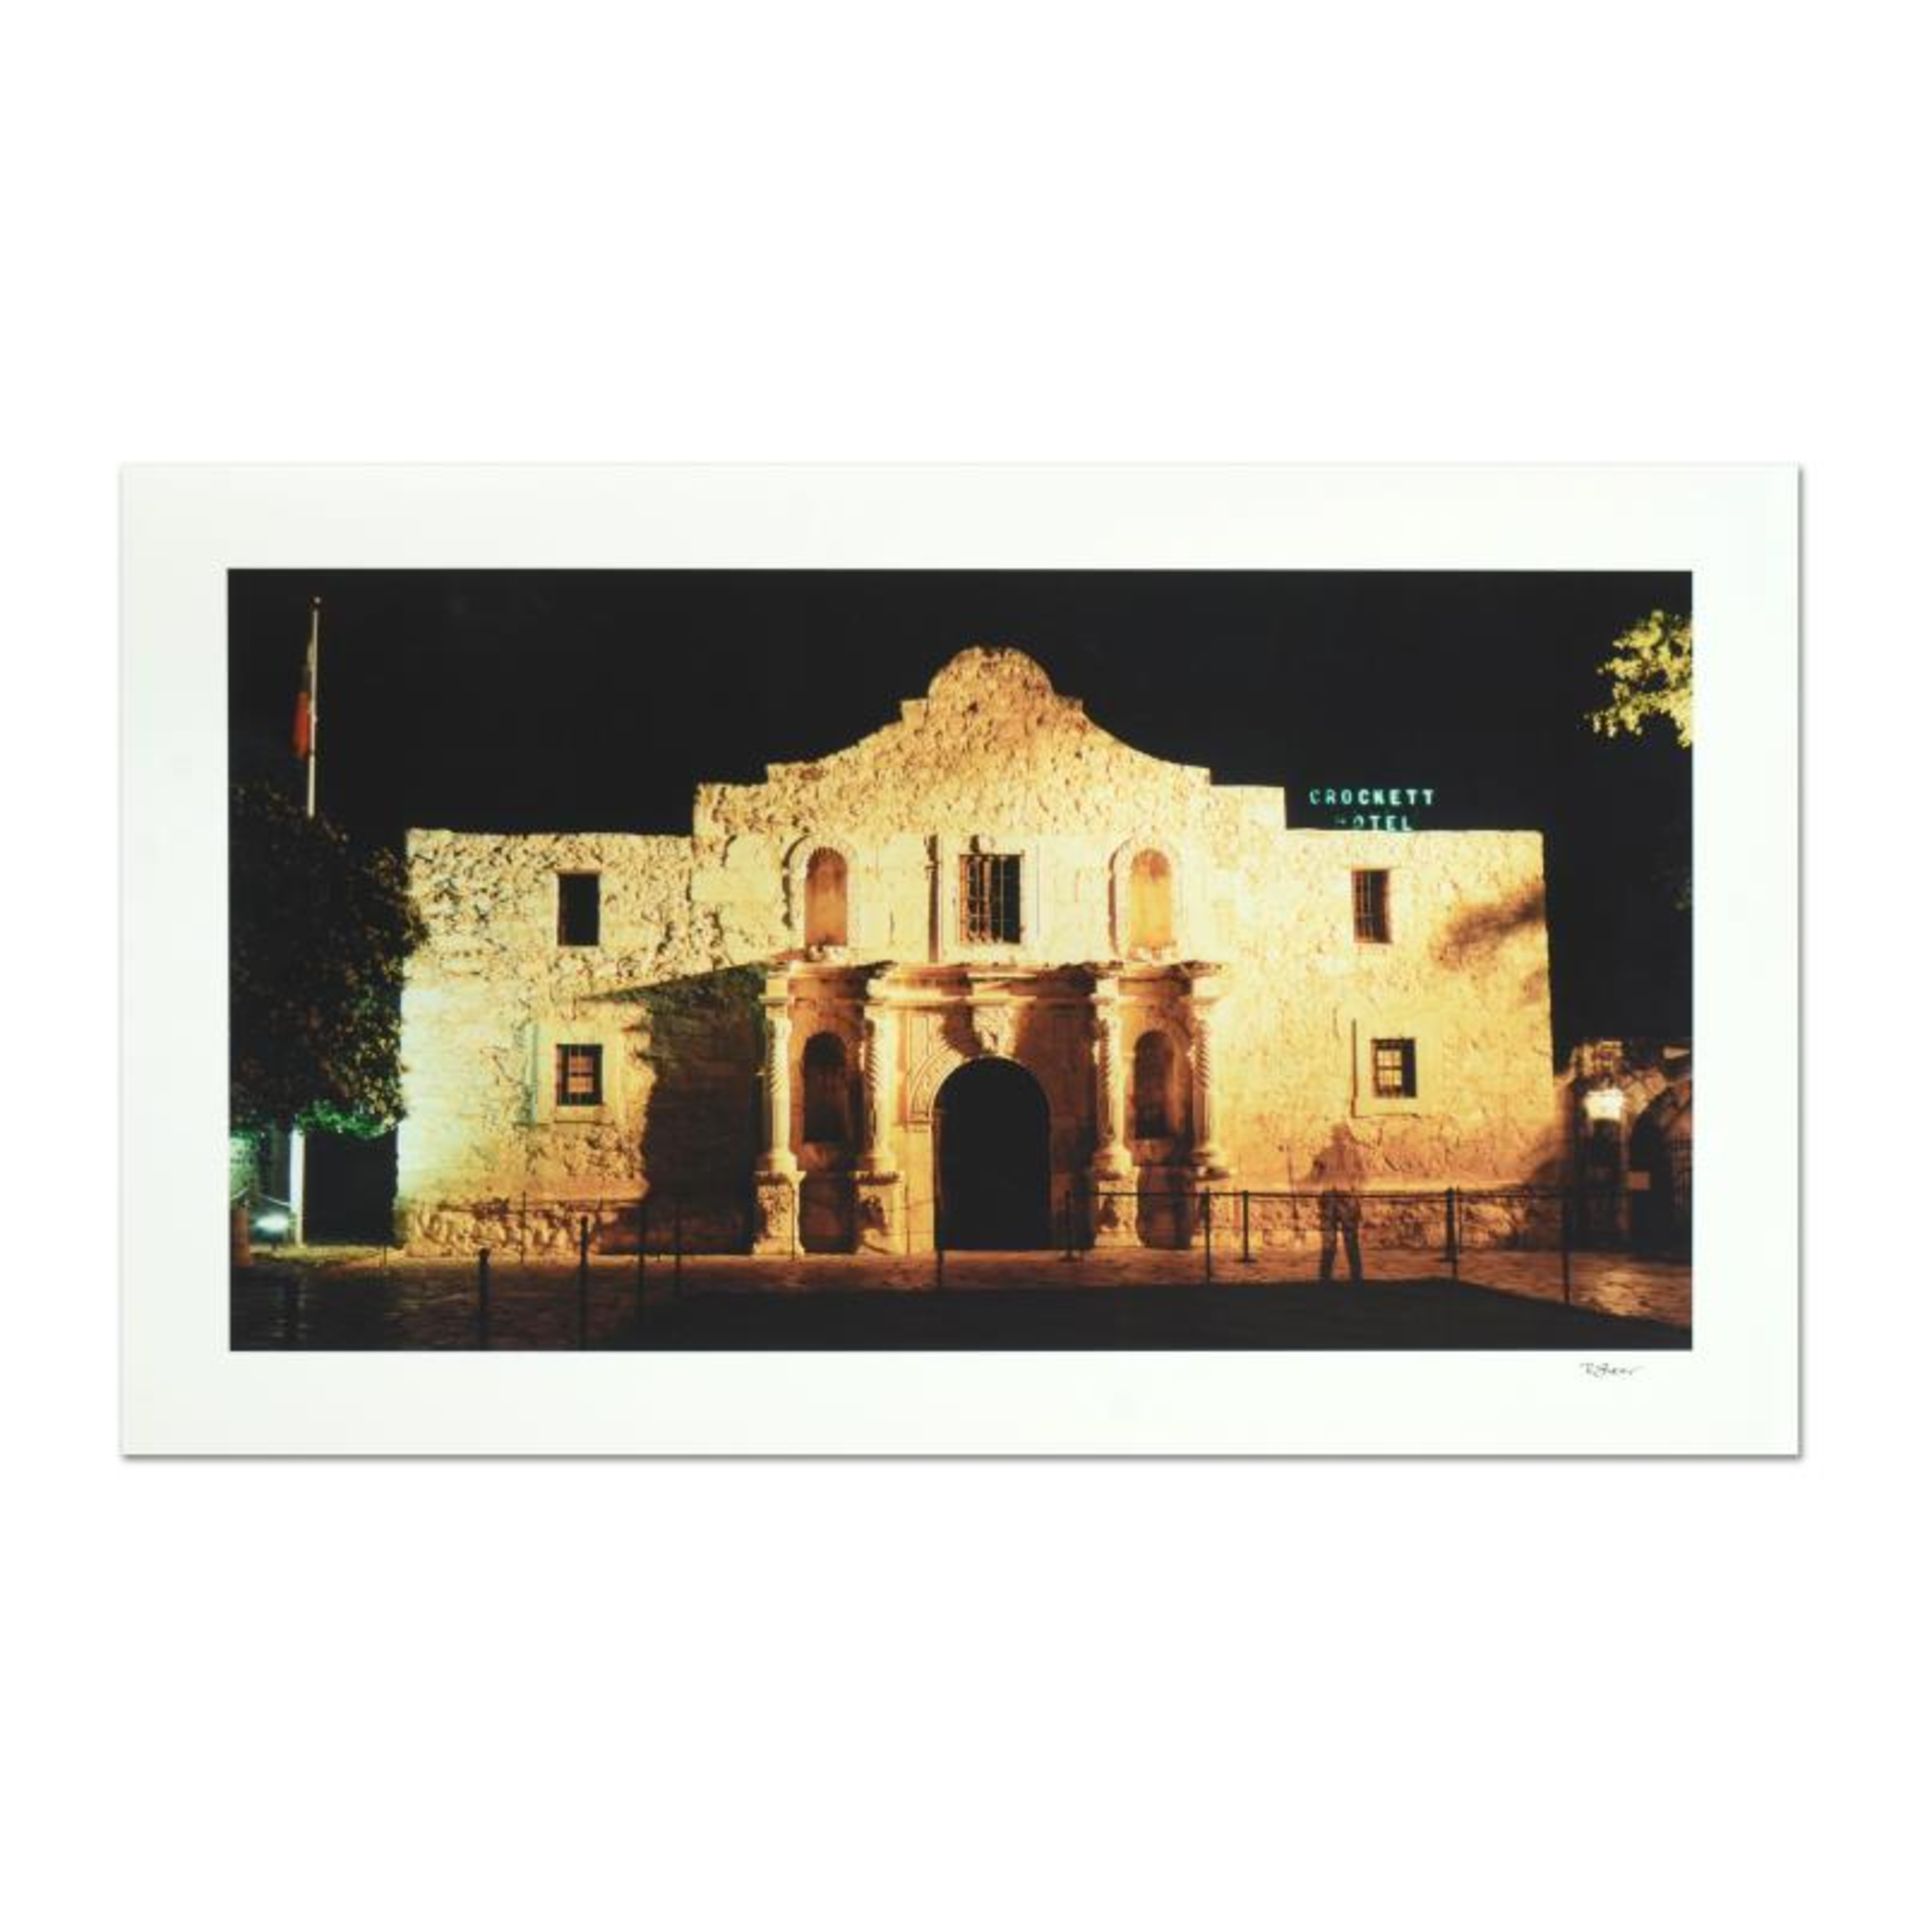 Robert Sheer, "Davy Crockett at the Alamo" Limited Edition Single Exposure Photo